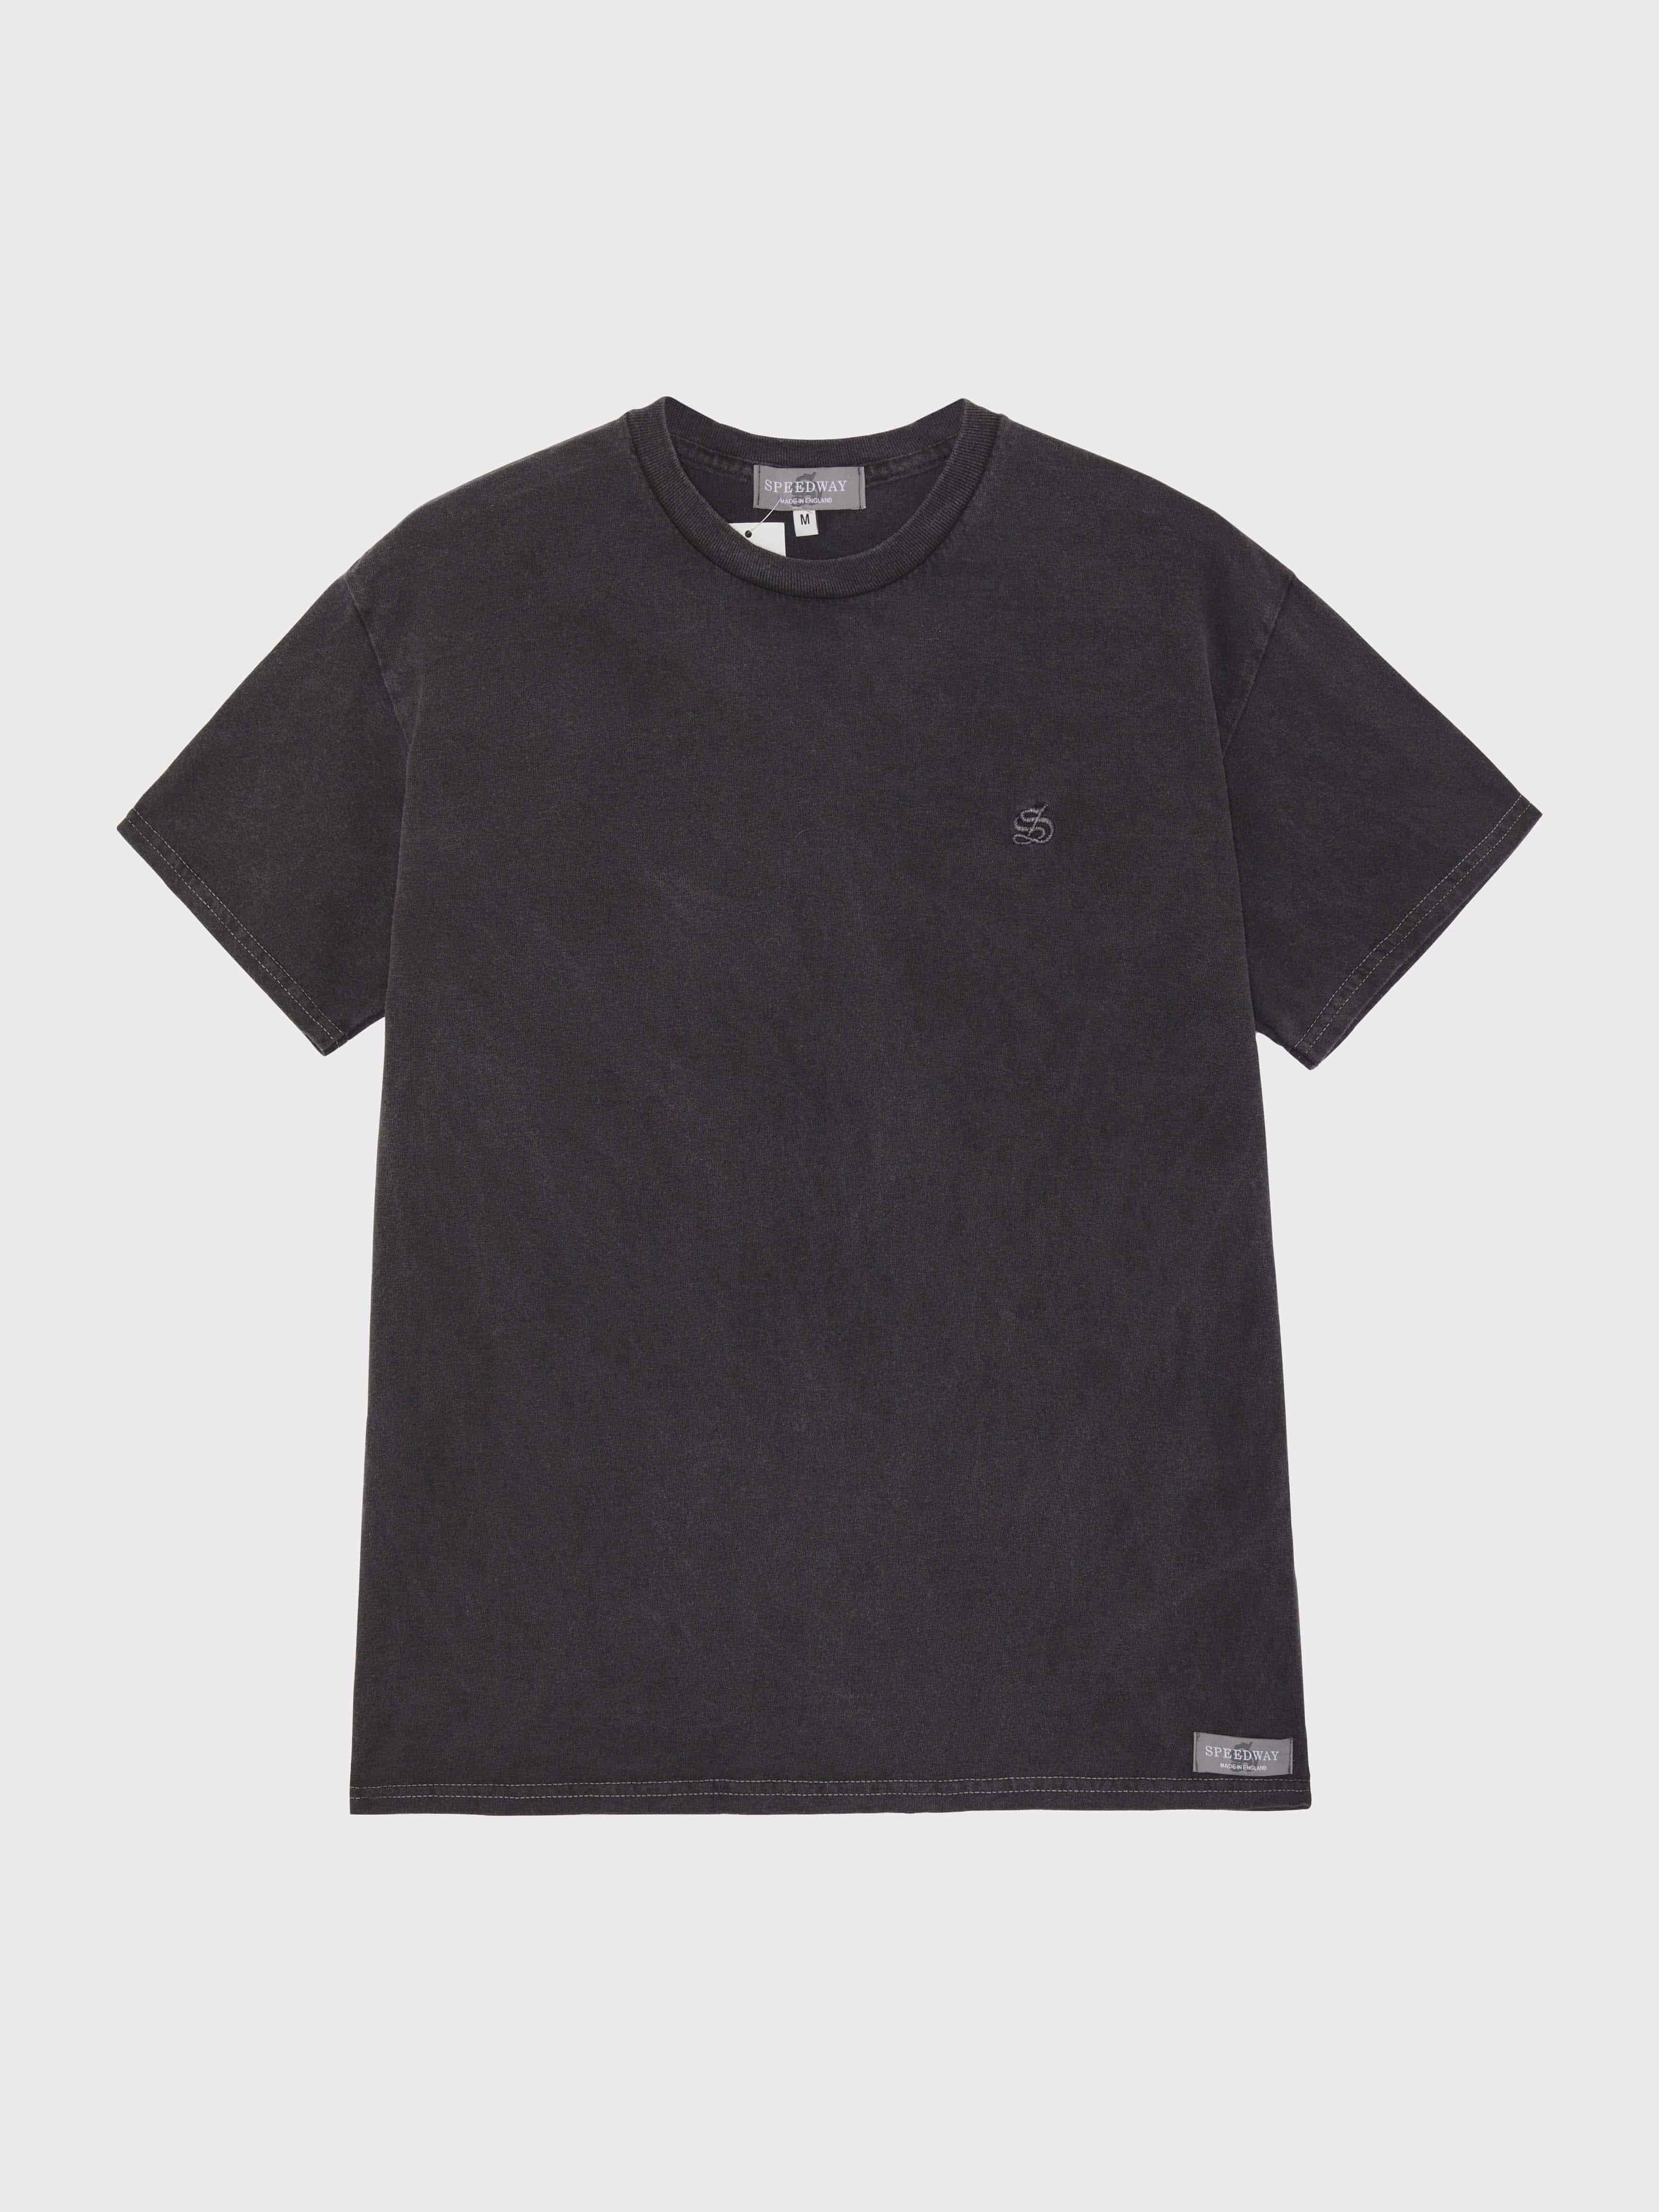 Classic Speedway Short Sleeve T-Shirt - Black Wash